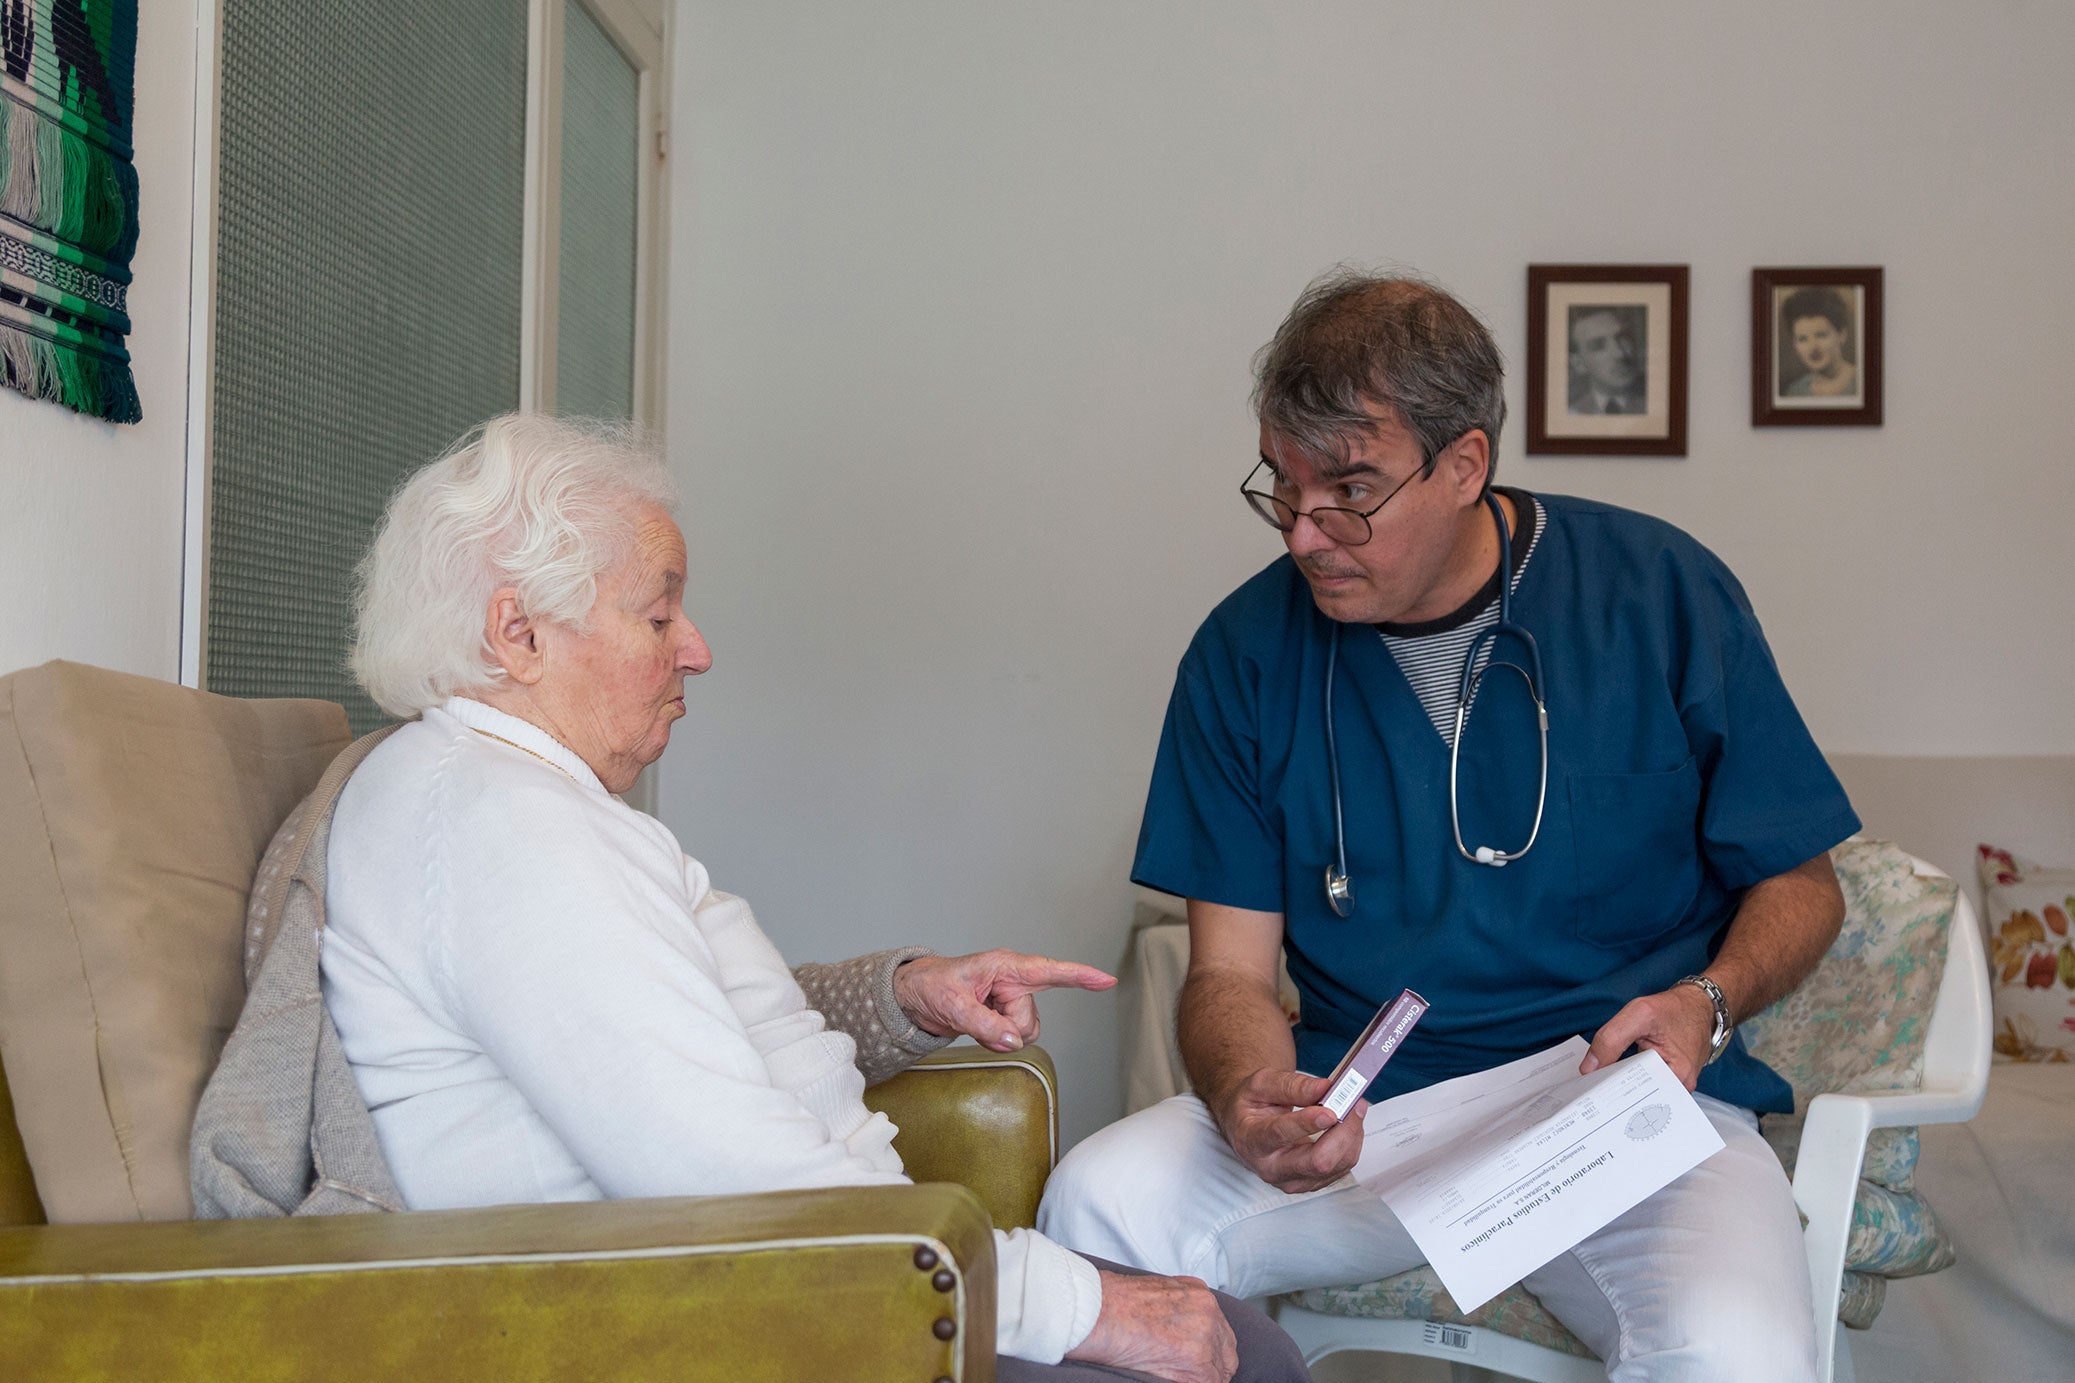 Médico examina a paciente adulto mayor